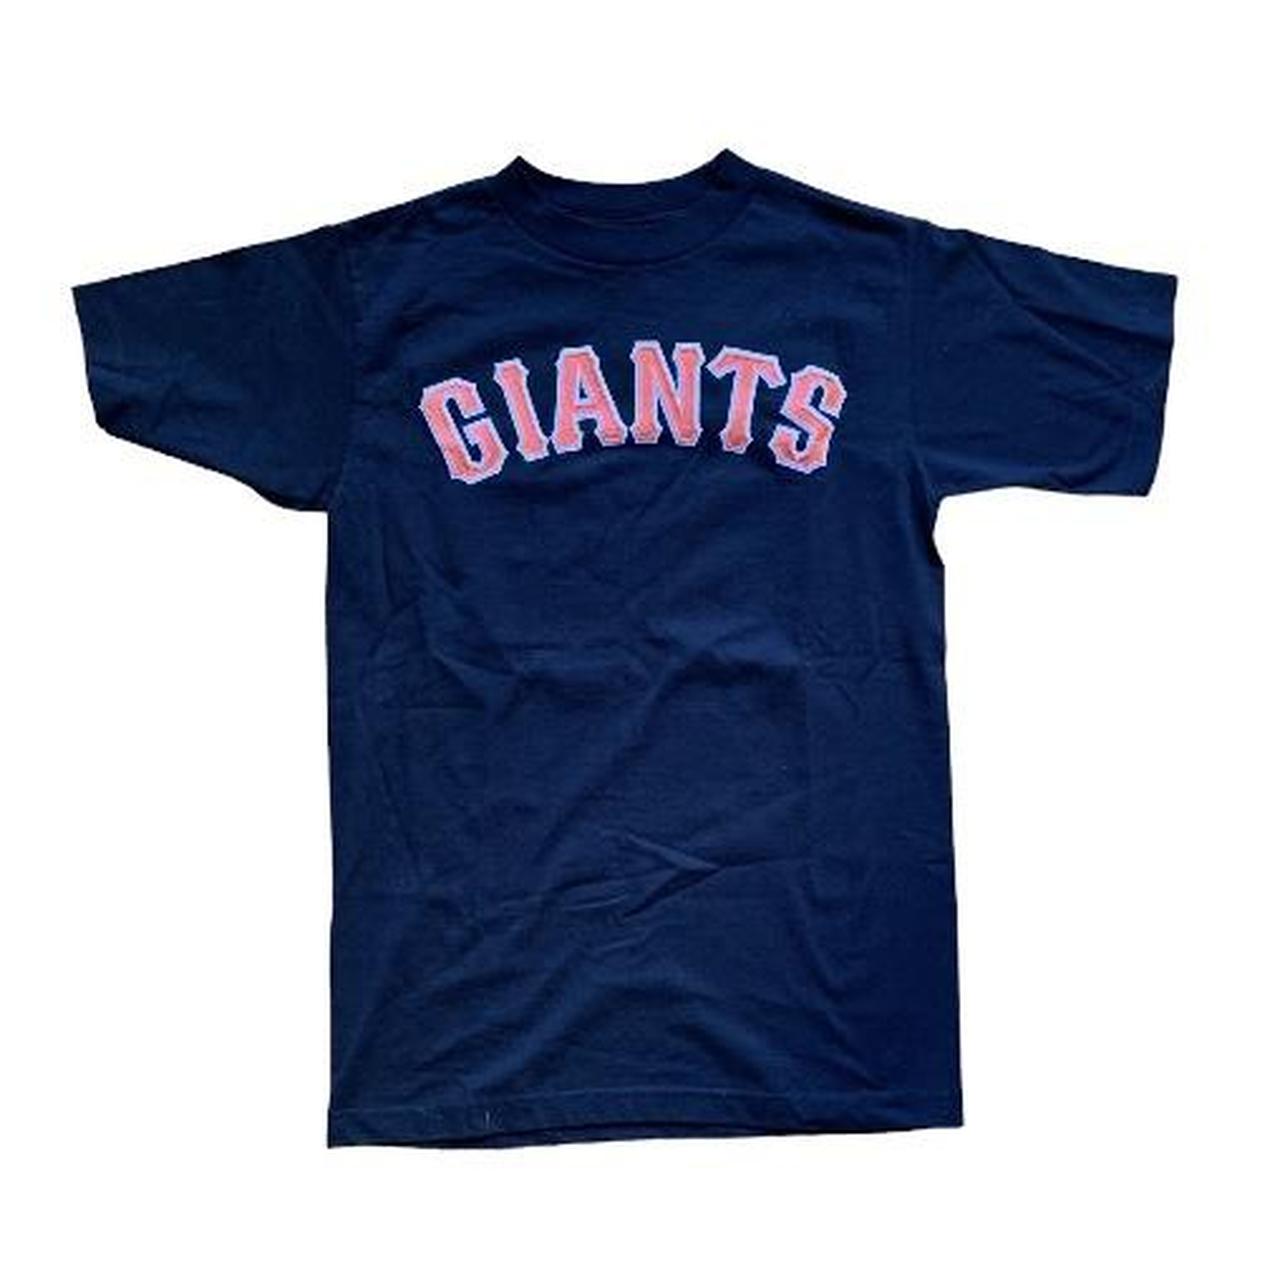 San Francisco Giants NWT button up baseball shirt size L